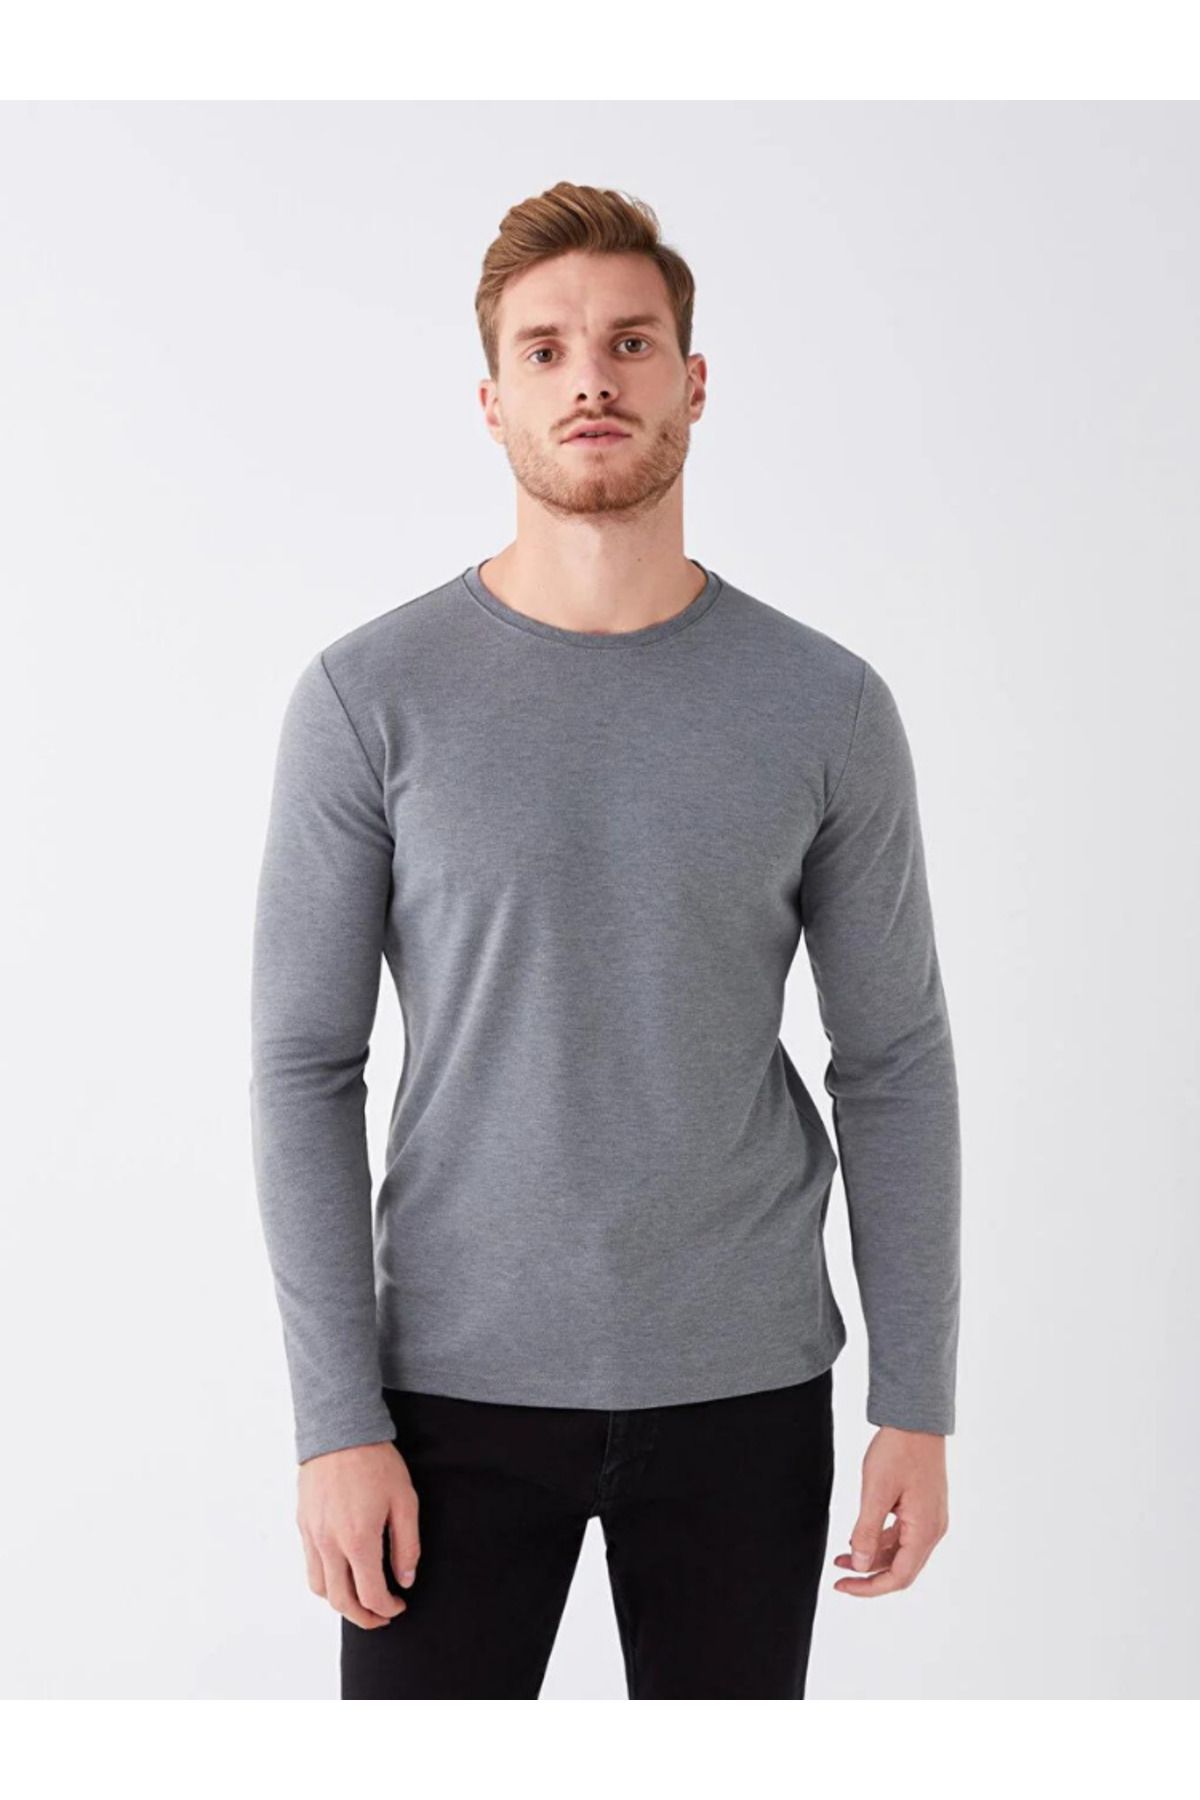 Adult Long-Sleeve Gray Plus Size Bodysuit